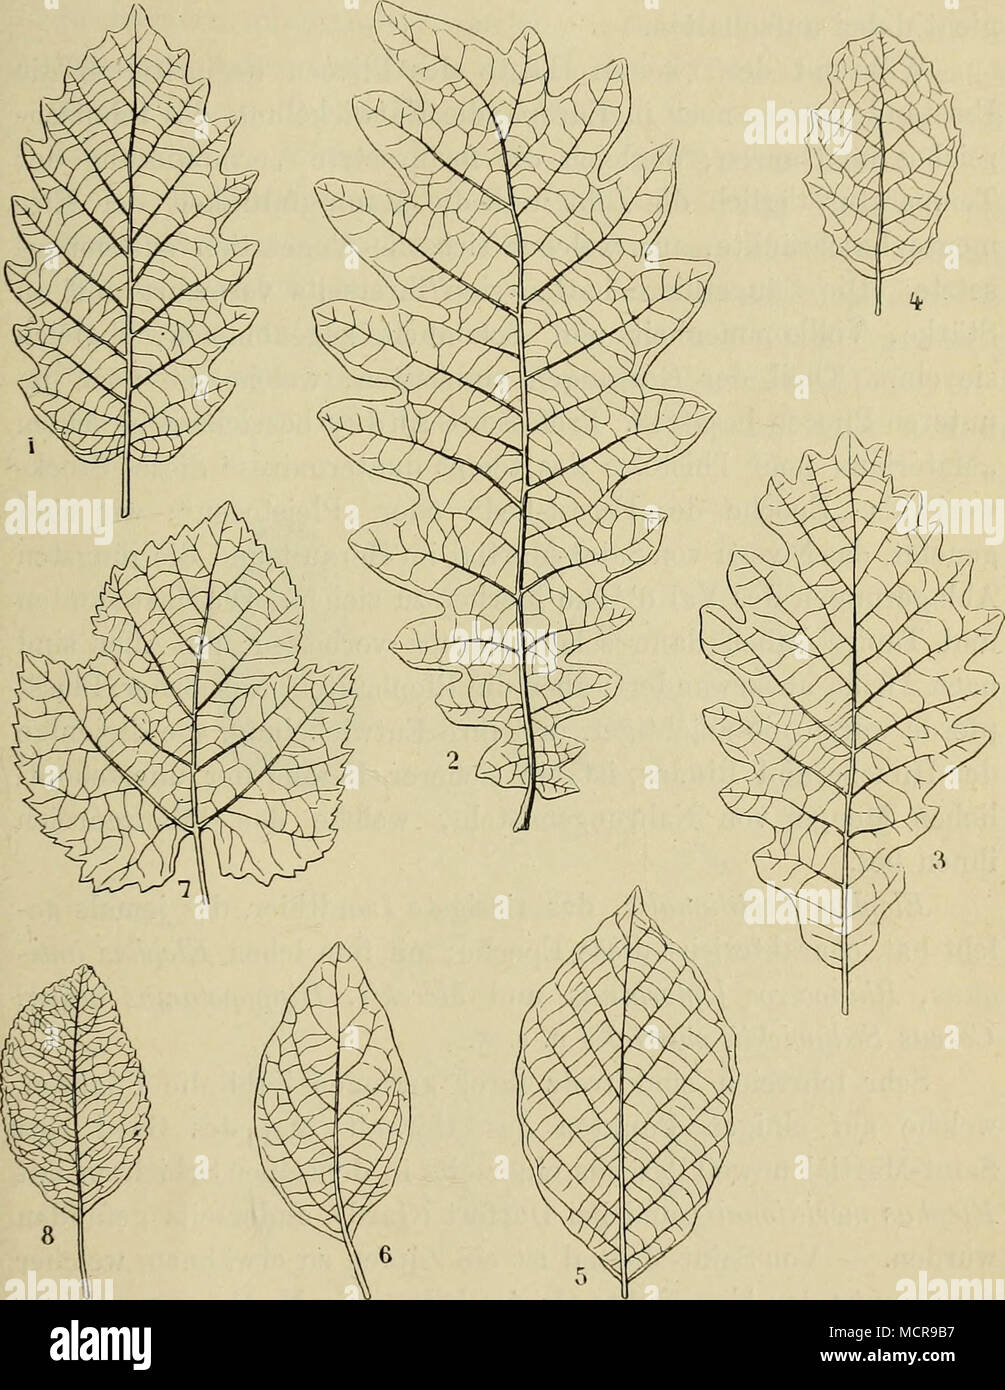 . Charakteristische Arten des jüngeren Pliocen der Auvergne und Italiens. 1. Quercus Mirbechii antiqua, Sap. (Auvergne). — 2, Quercus Lamoltü, Sap., (Auv.). — 3. Quercus roburoides, Gaud. (Massa-Maritima). — 4. Quercus Hex, L. (Lipari). — 5. Fagus sylvatica, L. (Oberes Arnothal). — 6. Vibumum tinus, L. (Toscanische Travertine). — 7. Vitis vinlfera L. (Travertine von Era). — 8. Mespilus pyracantha L. (Travertine von Toscana). Stock Photo